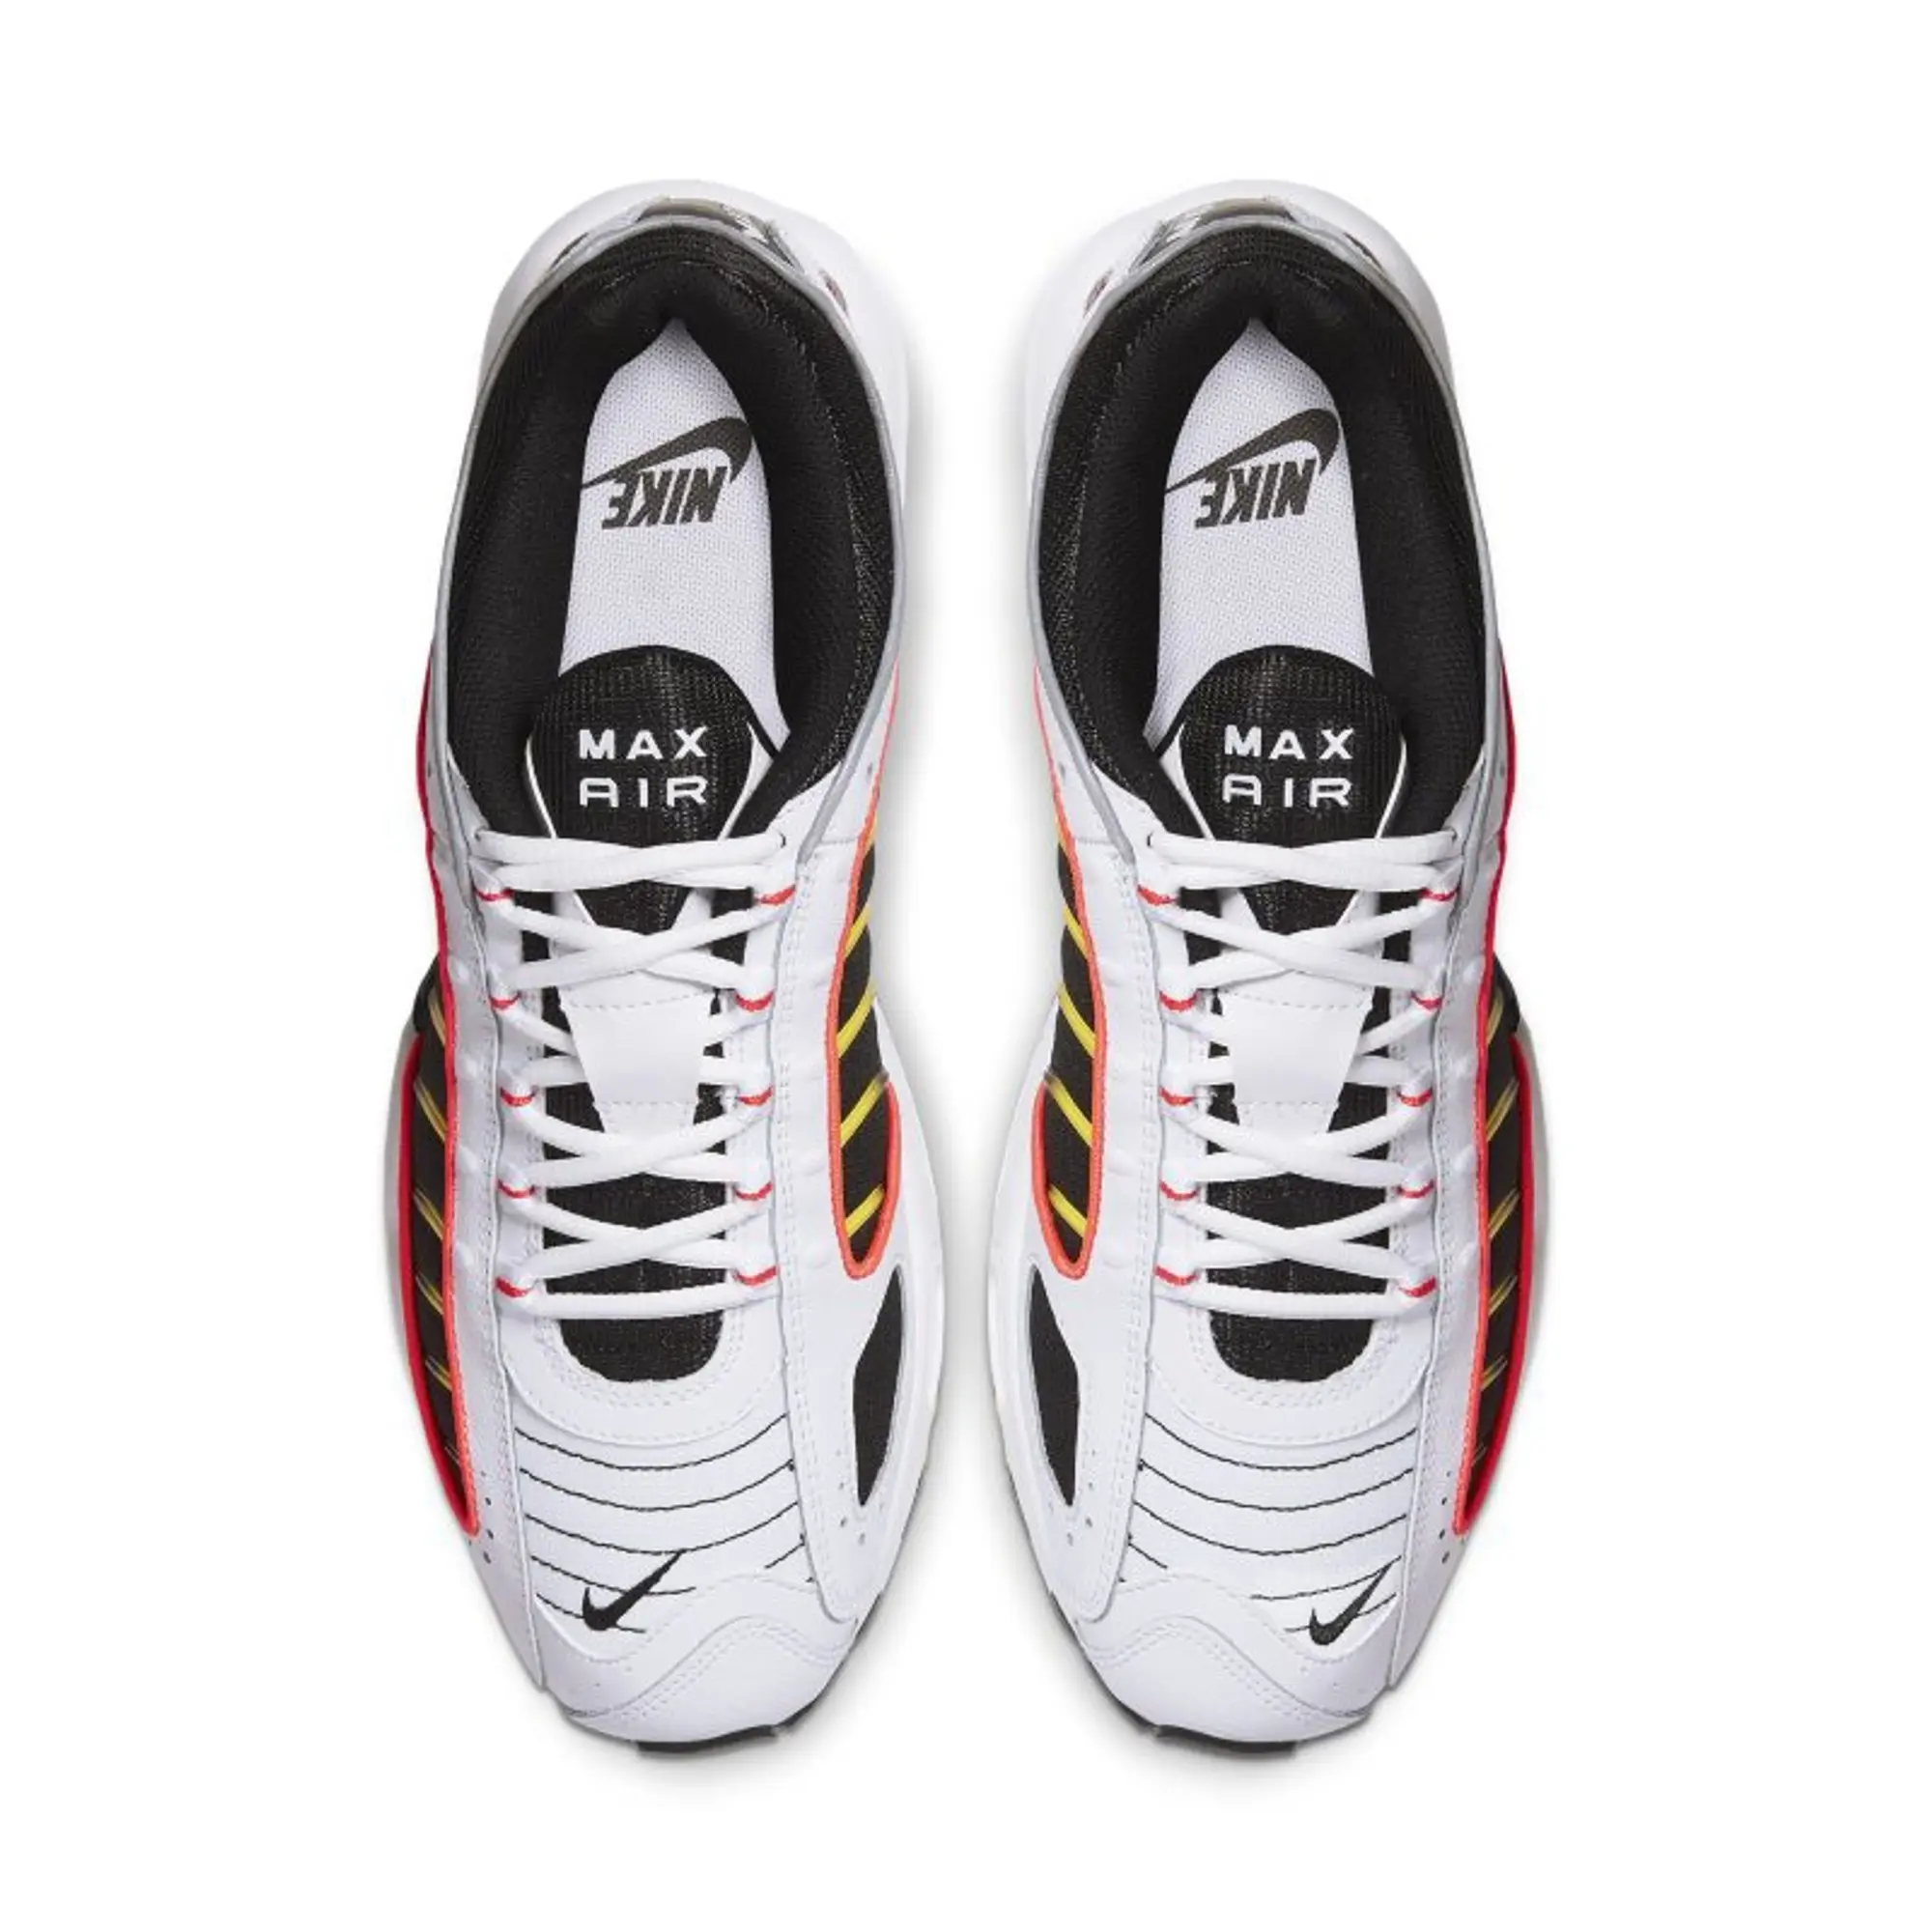 Nike Air Max Tailwind IV Bright Crimson Shoes